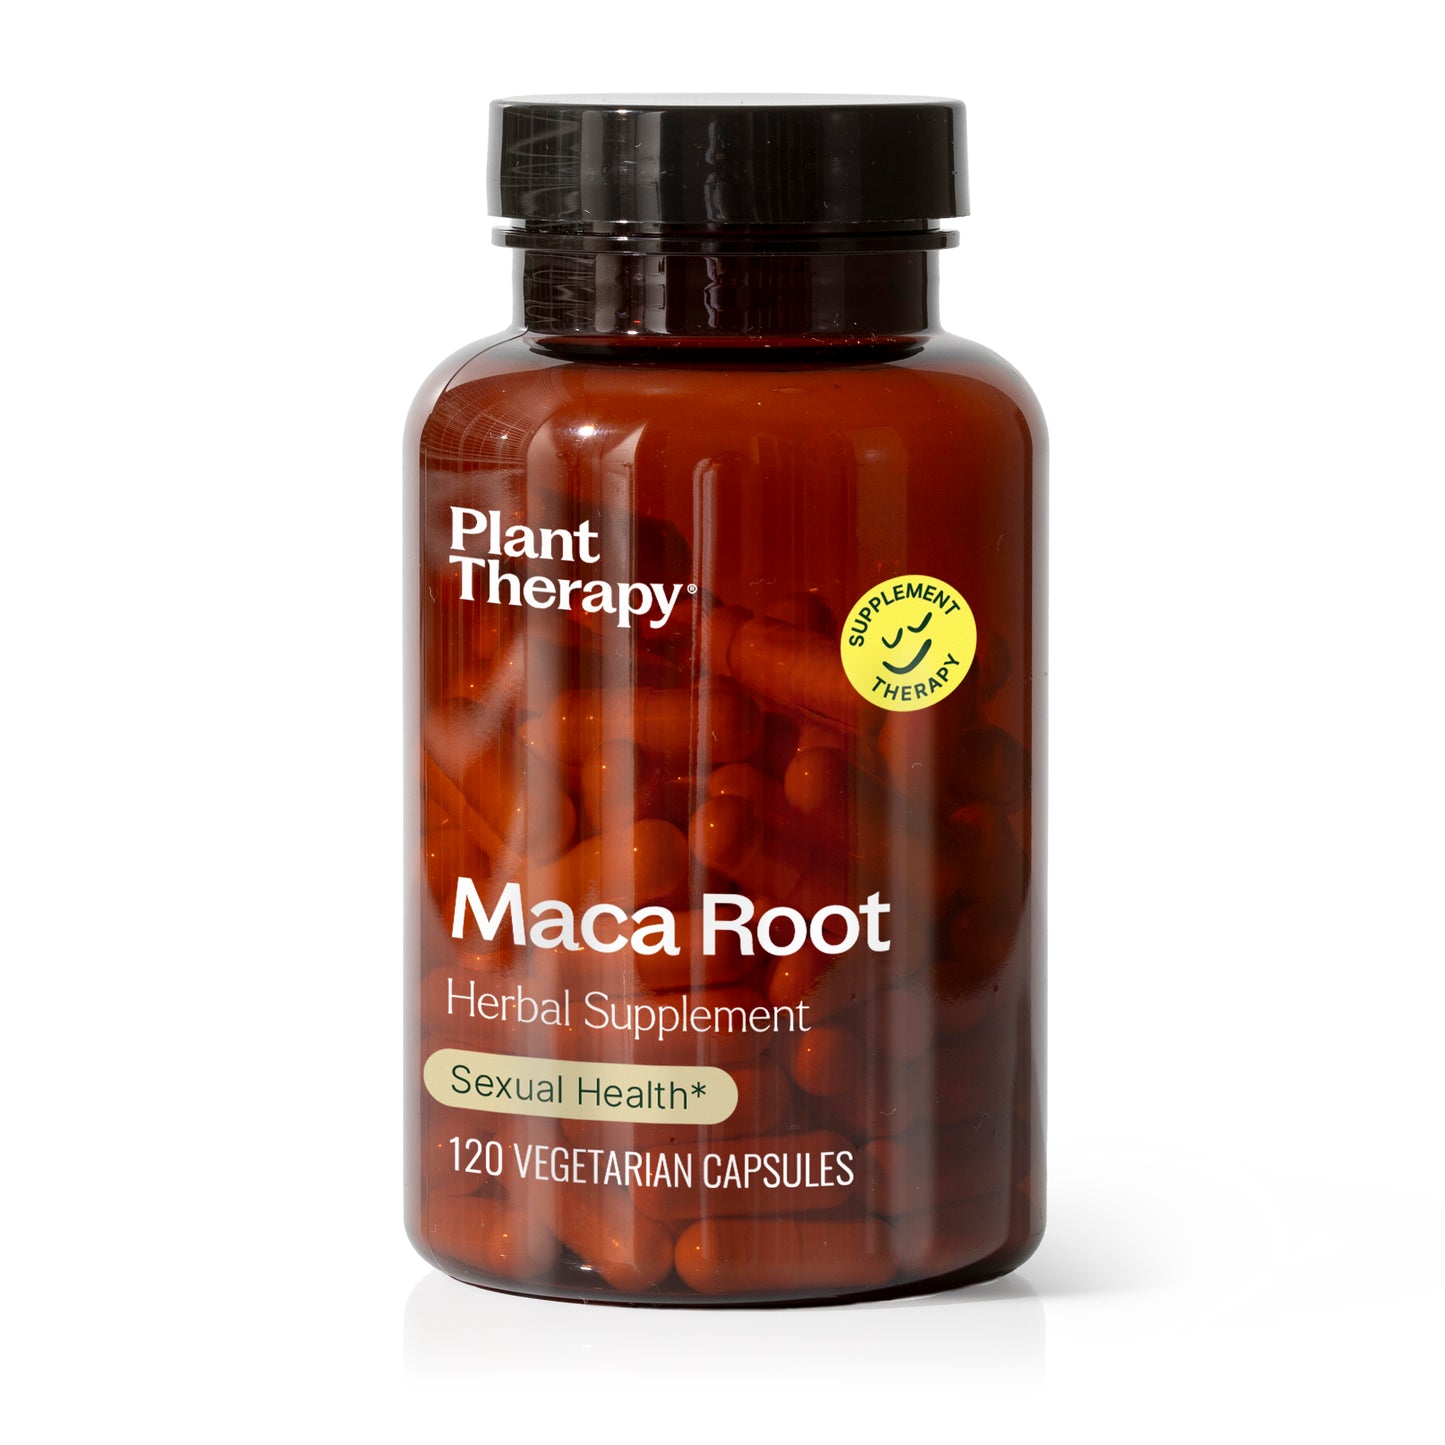 Maca Root Herbal Supplement Capsules front label